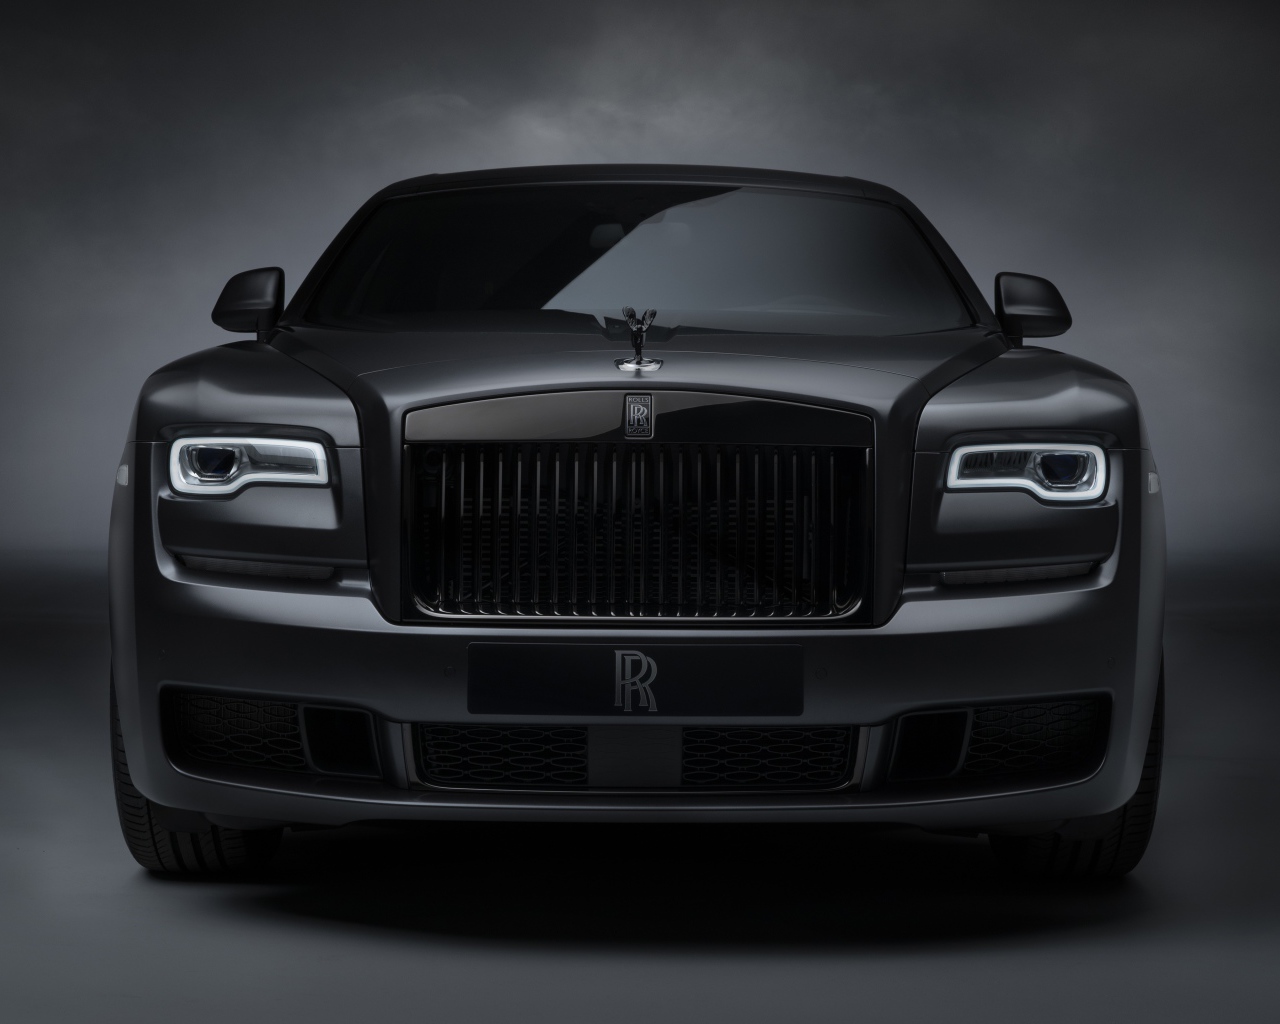 Автомобиль Rolls-Royce Ghost, 2019 года вид спереди